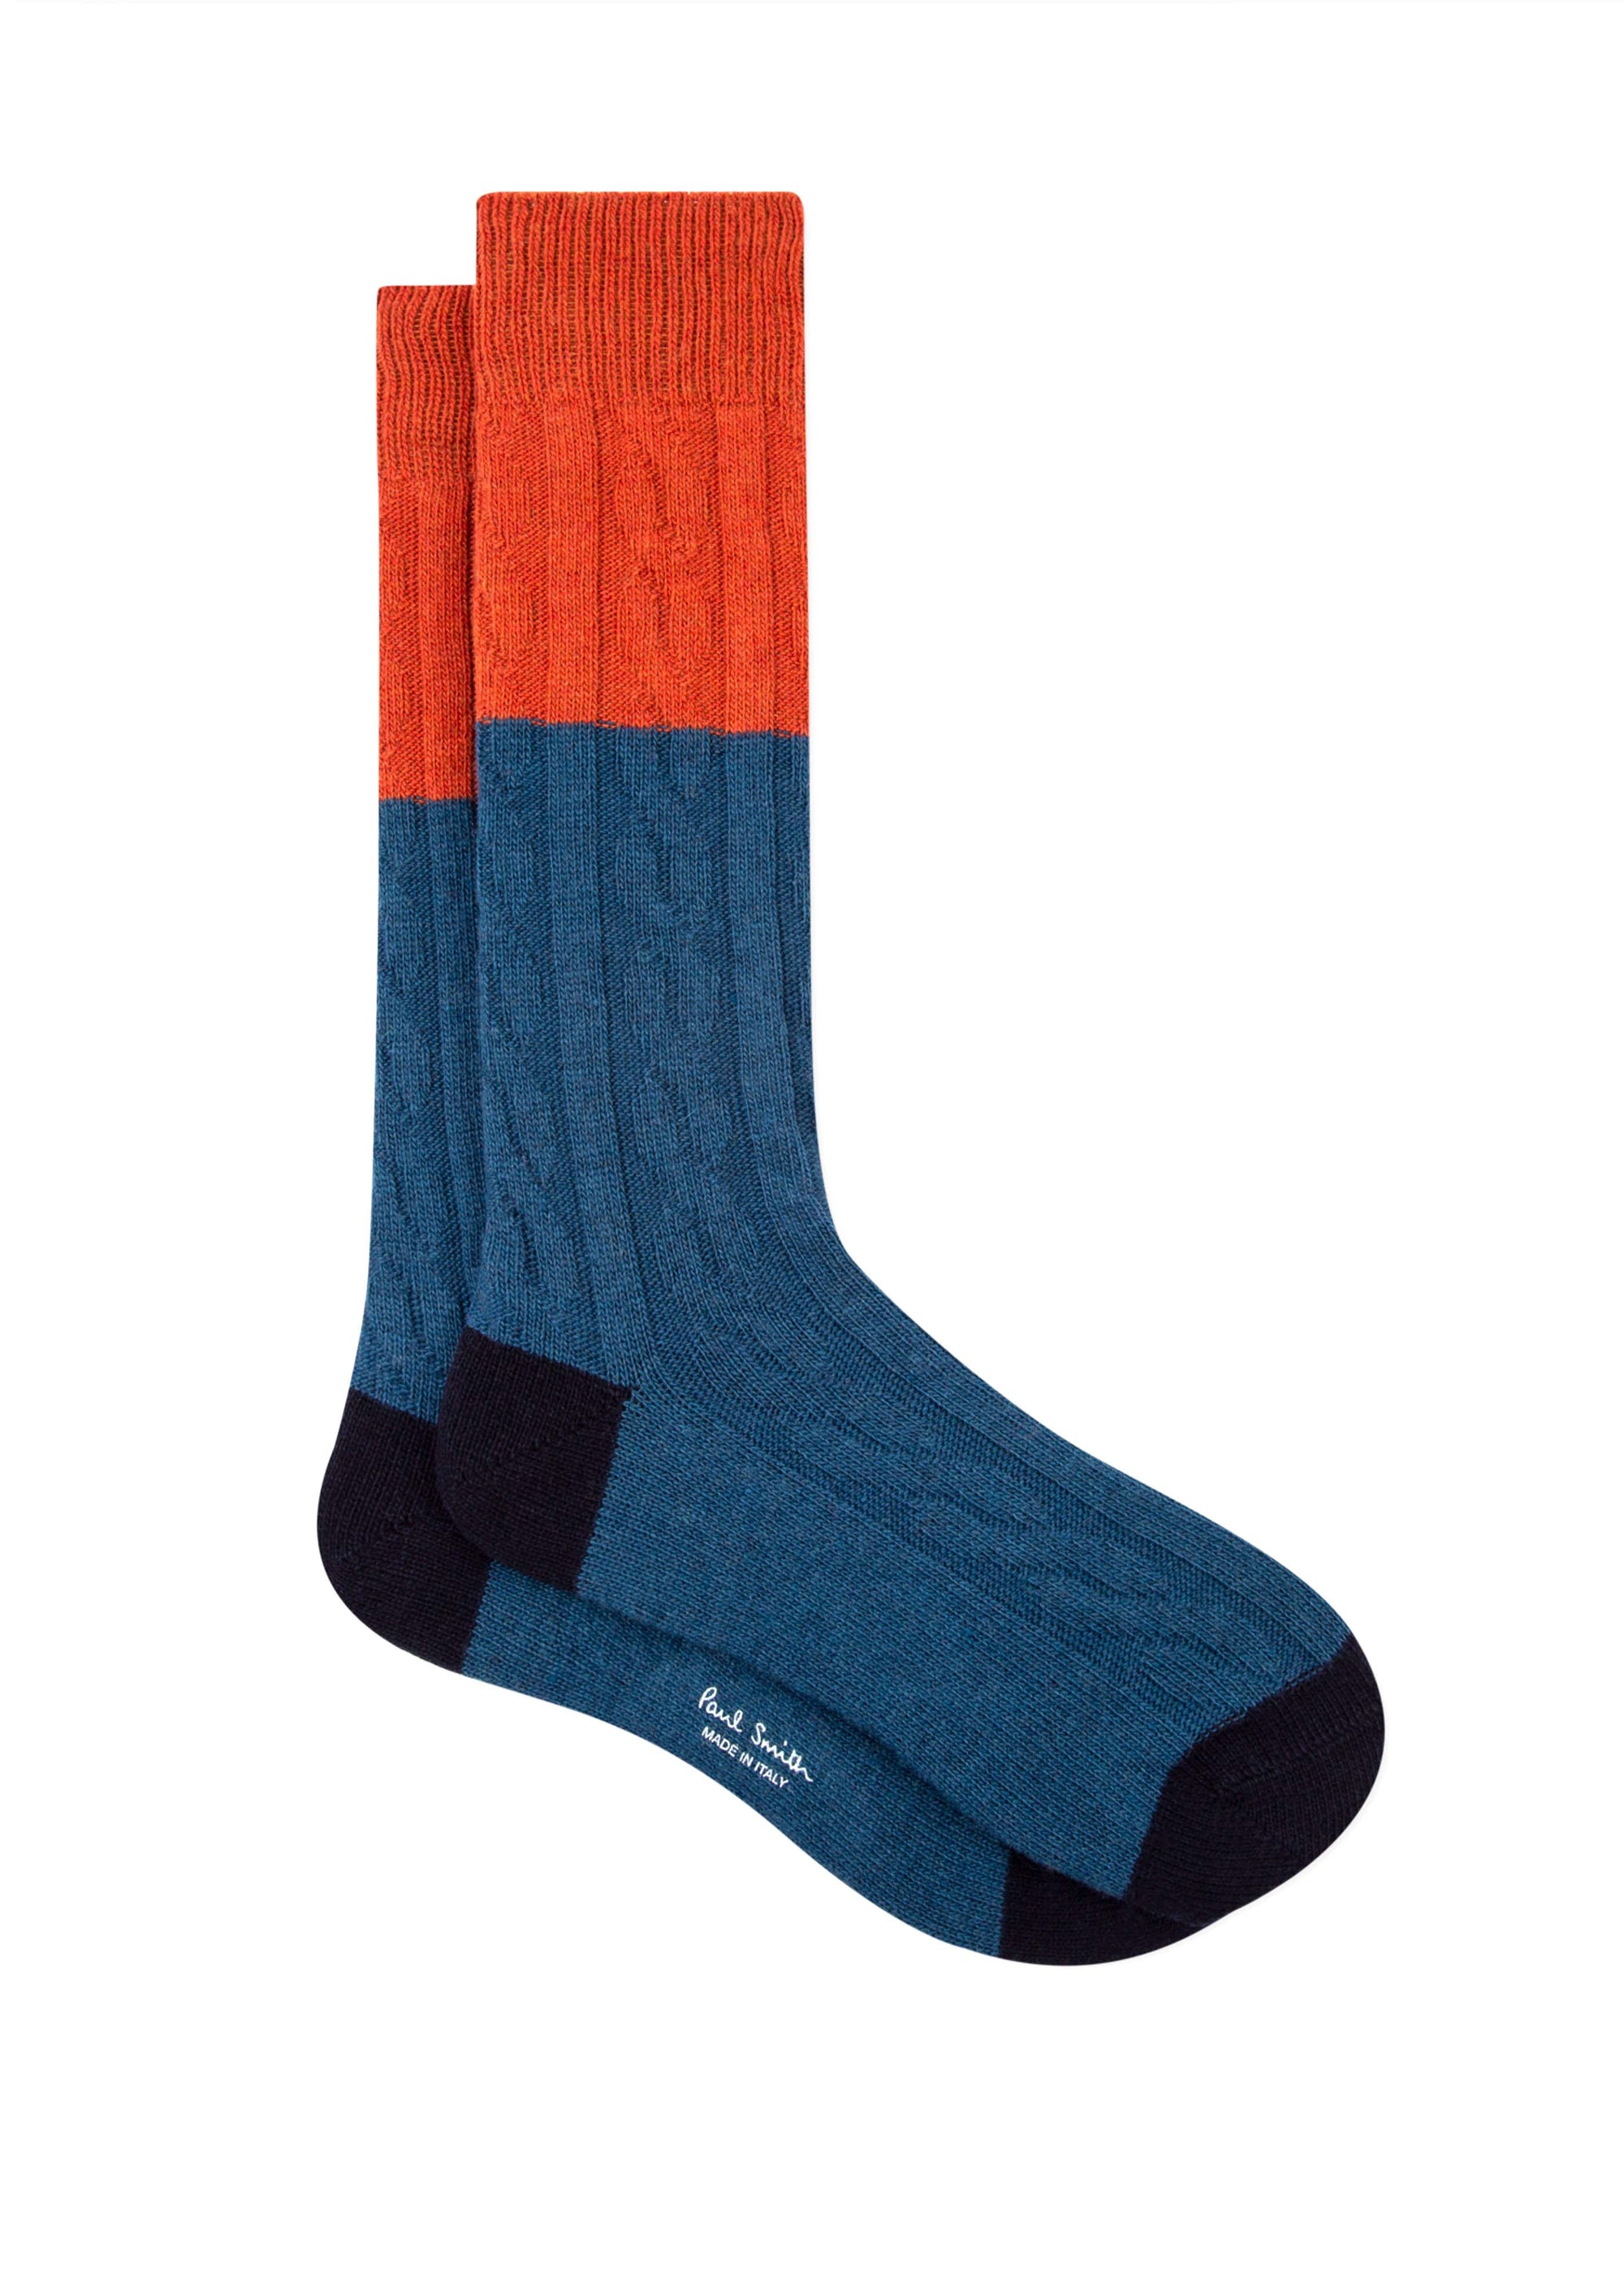 PAUL SMITH Colour Block Cable Knit Socks in Orange / Blue